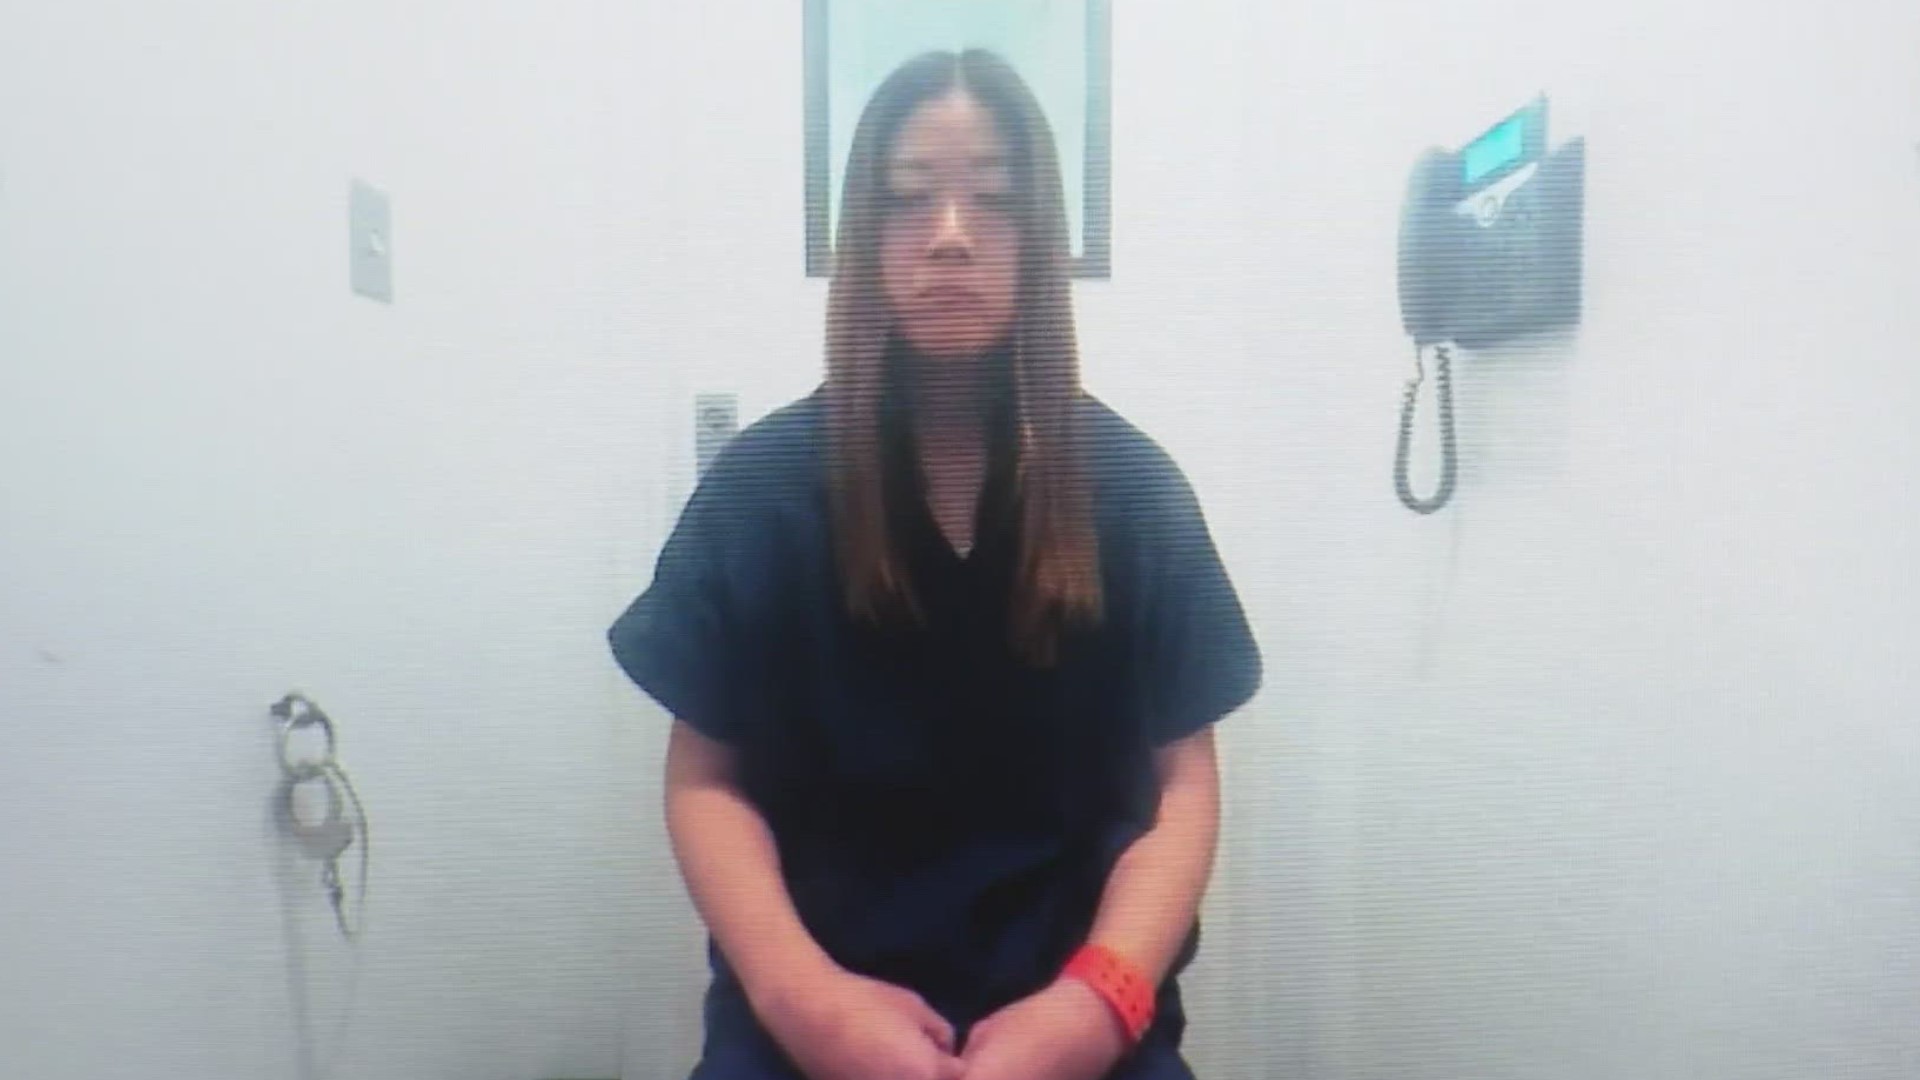 X Video Of Jacqueline - Court appearance for Jacqueline Ma, teacher accused of child molestation |  cbs8.com